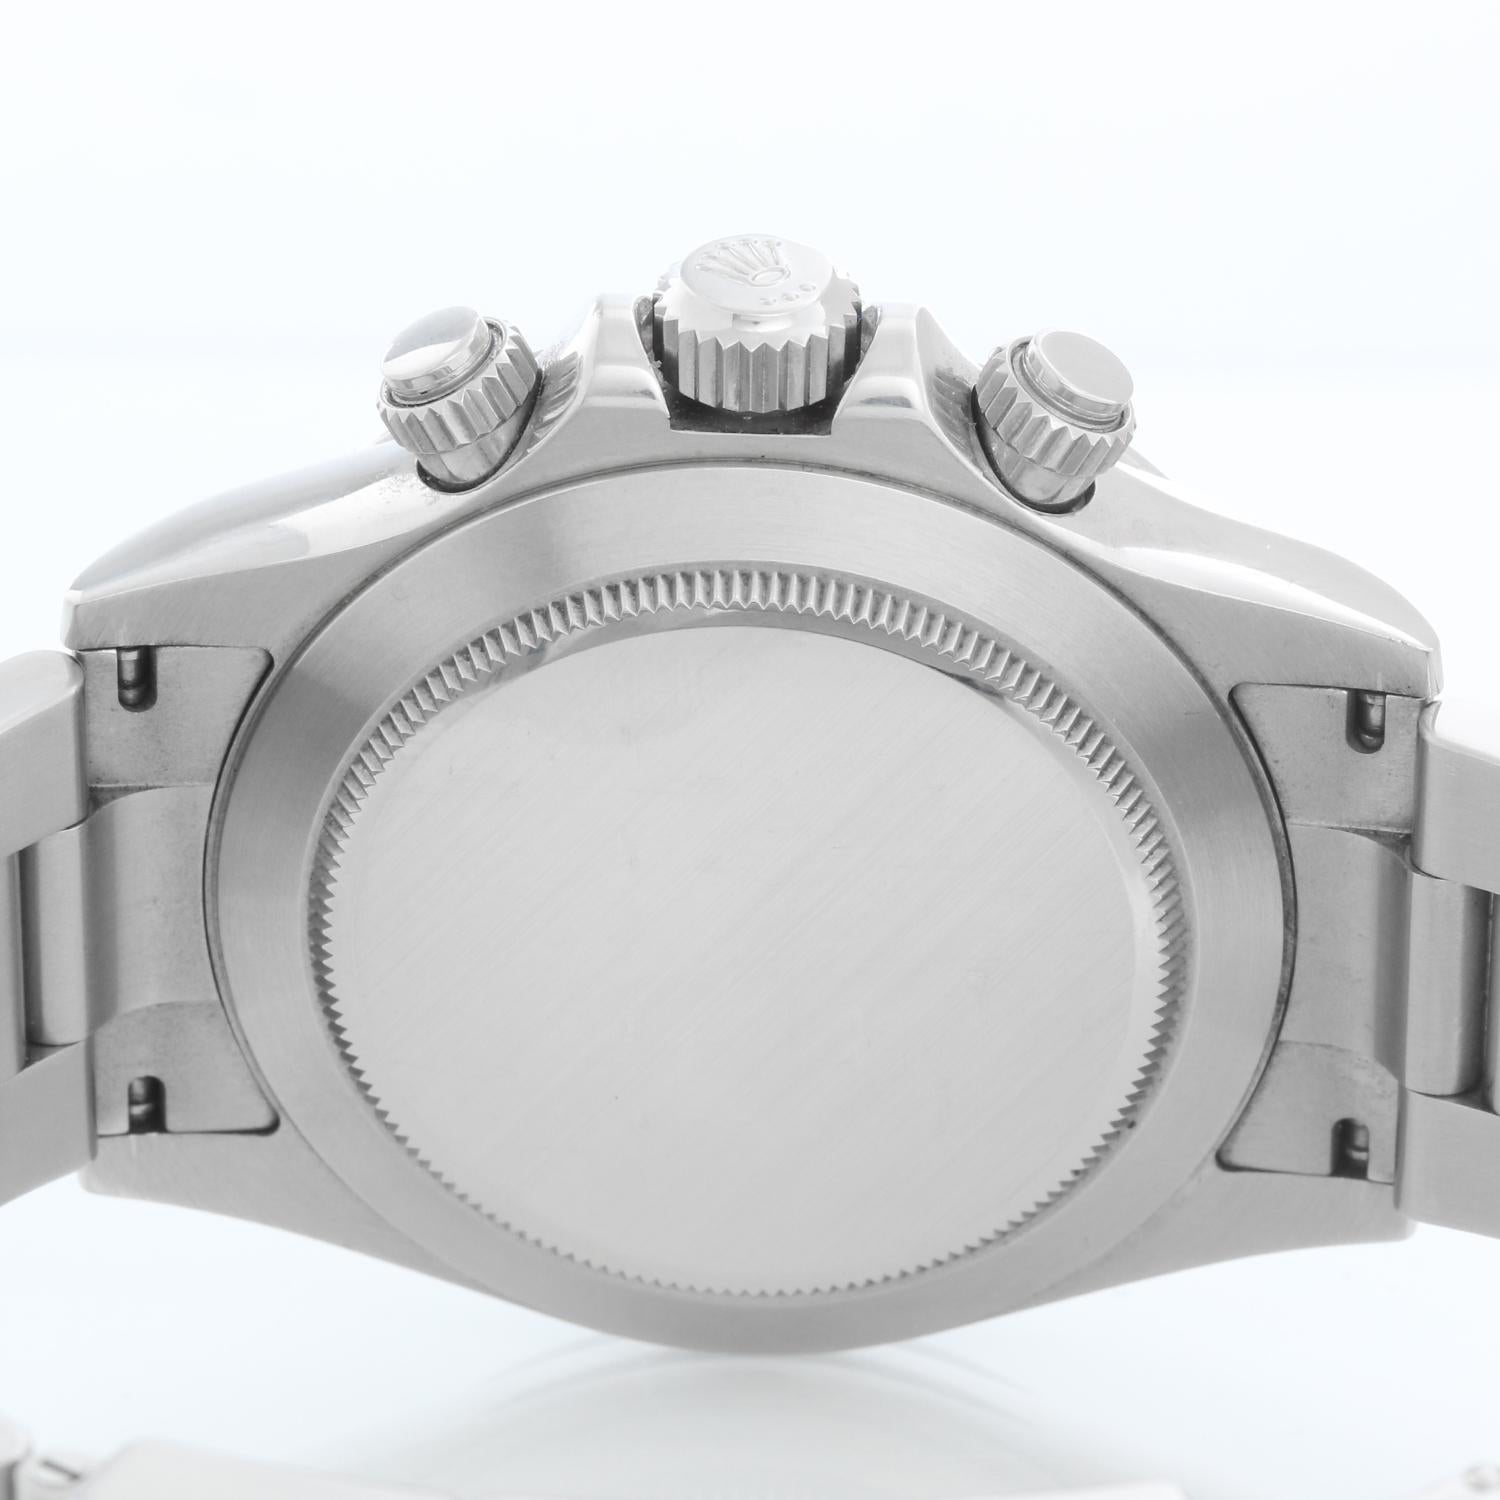 Rolex Daytona Chronograph Men's Stainless Steel Watch 116520 1